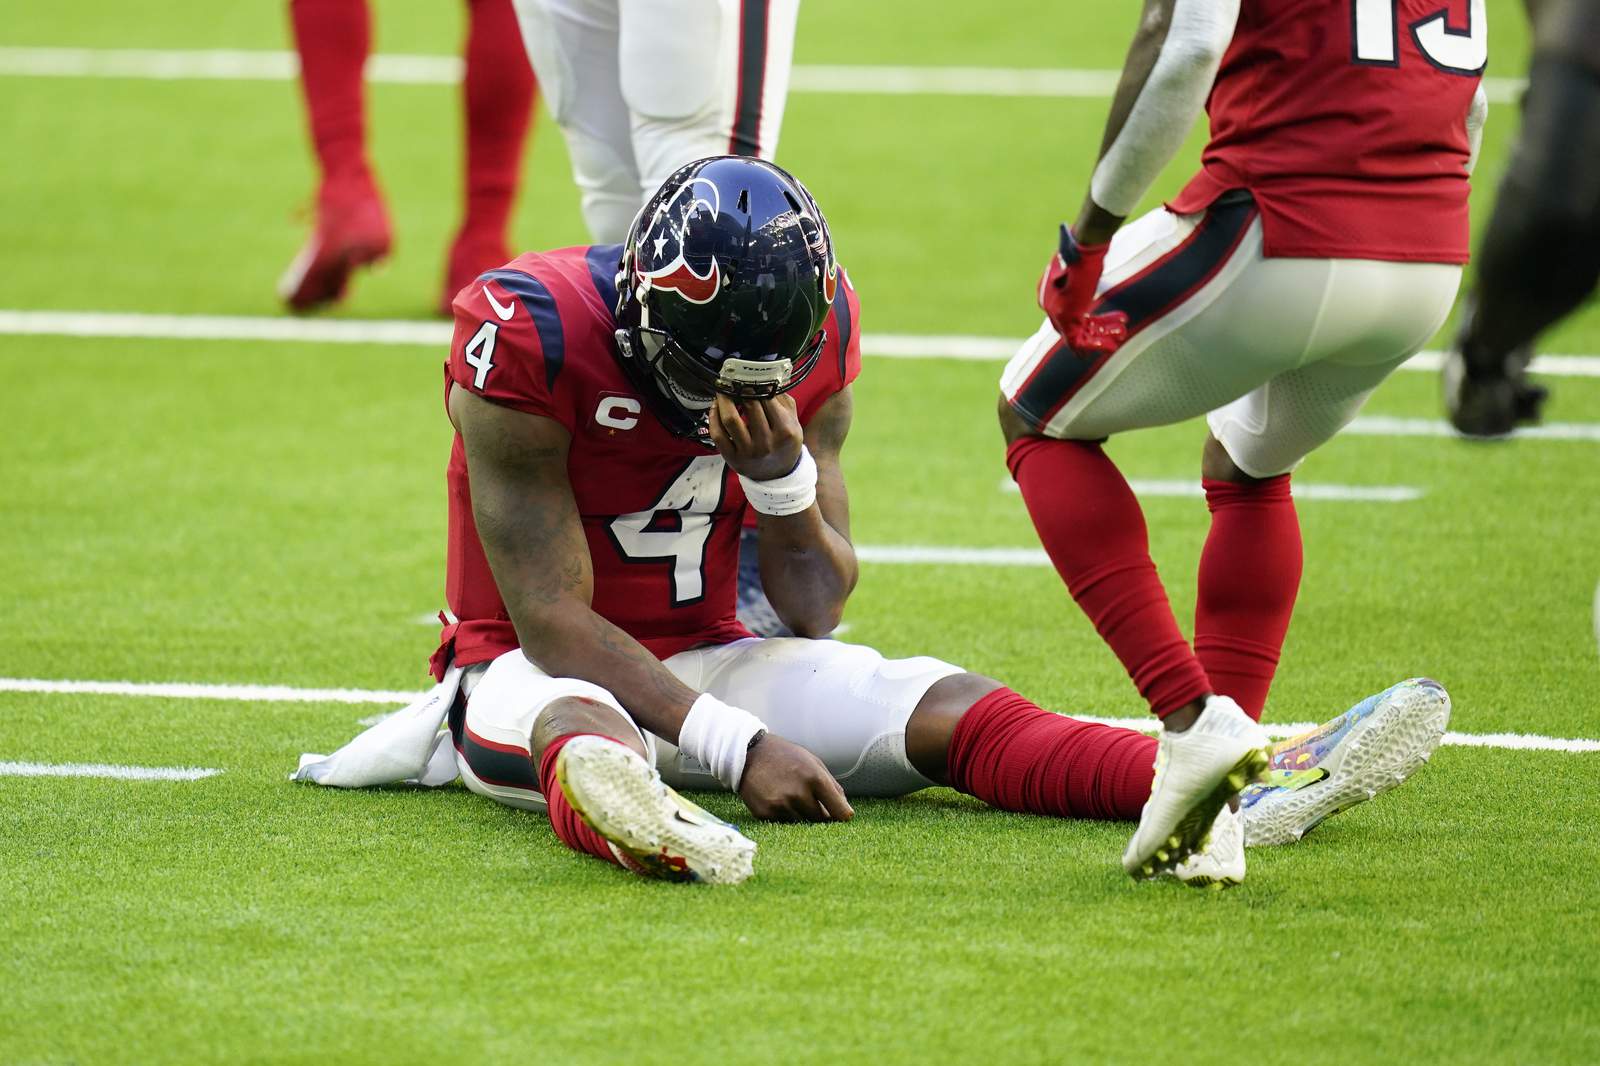 ‘Tired of losing:’ Texans QB Watson takes heartbreaking loss hard